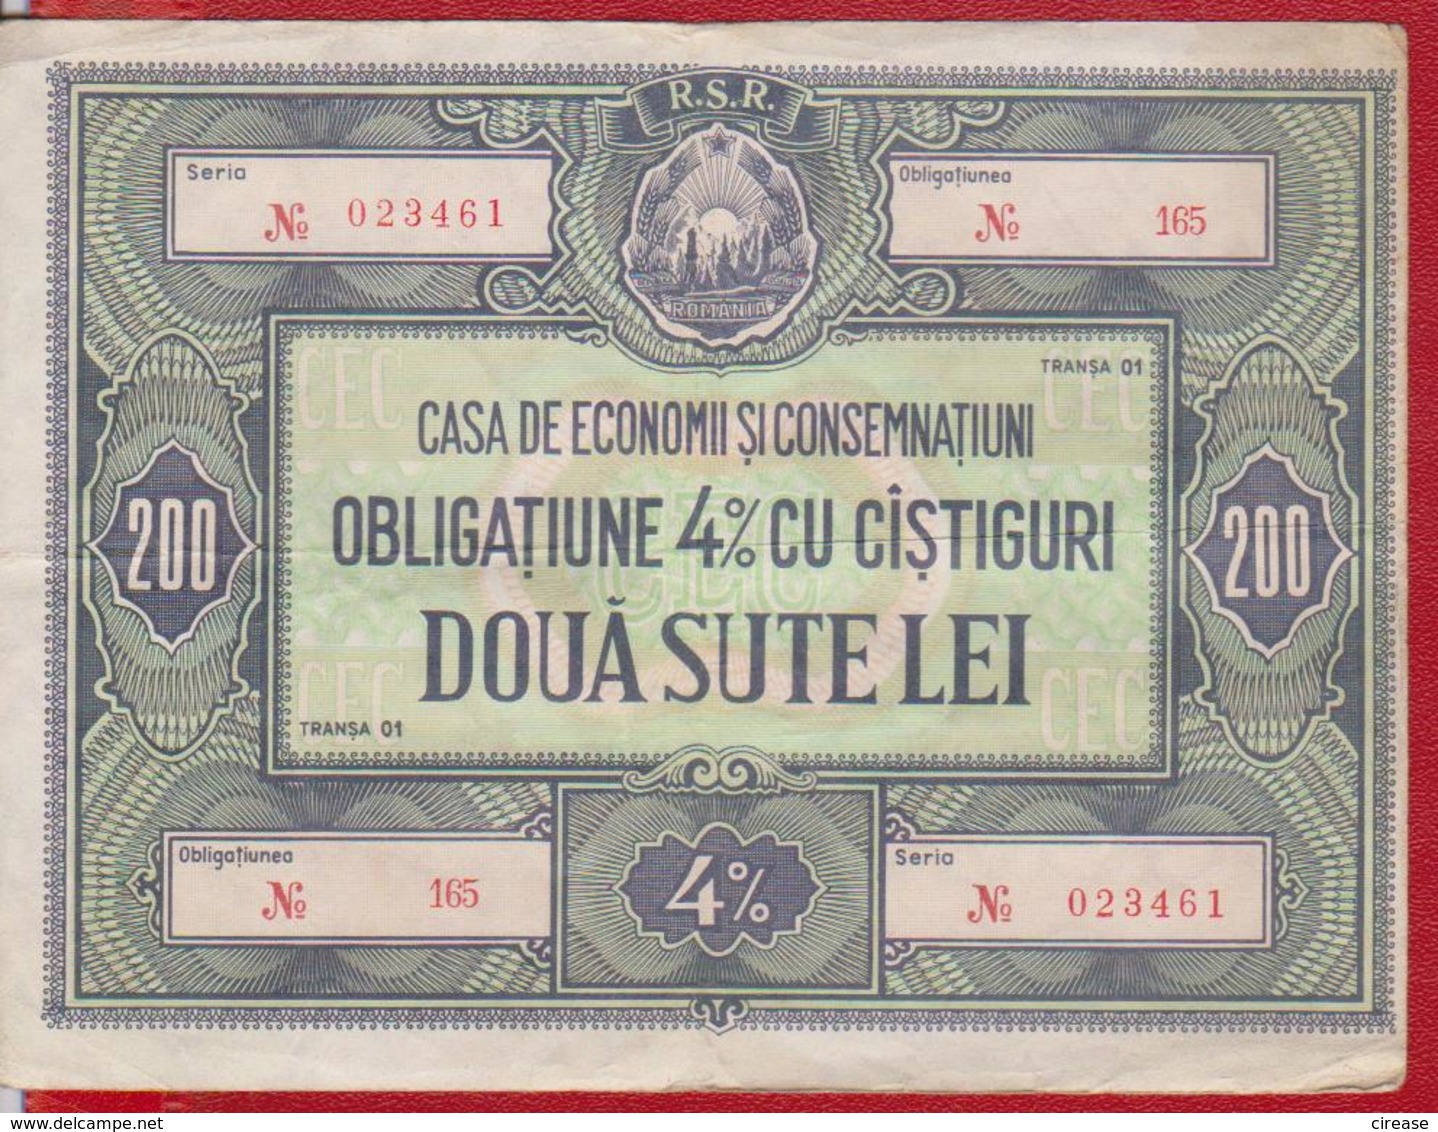 Romania 200 LEI CEC - Home Savings Bank Bond - Roumanie